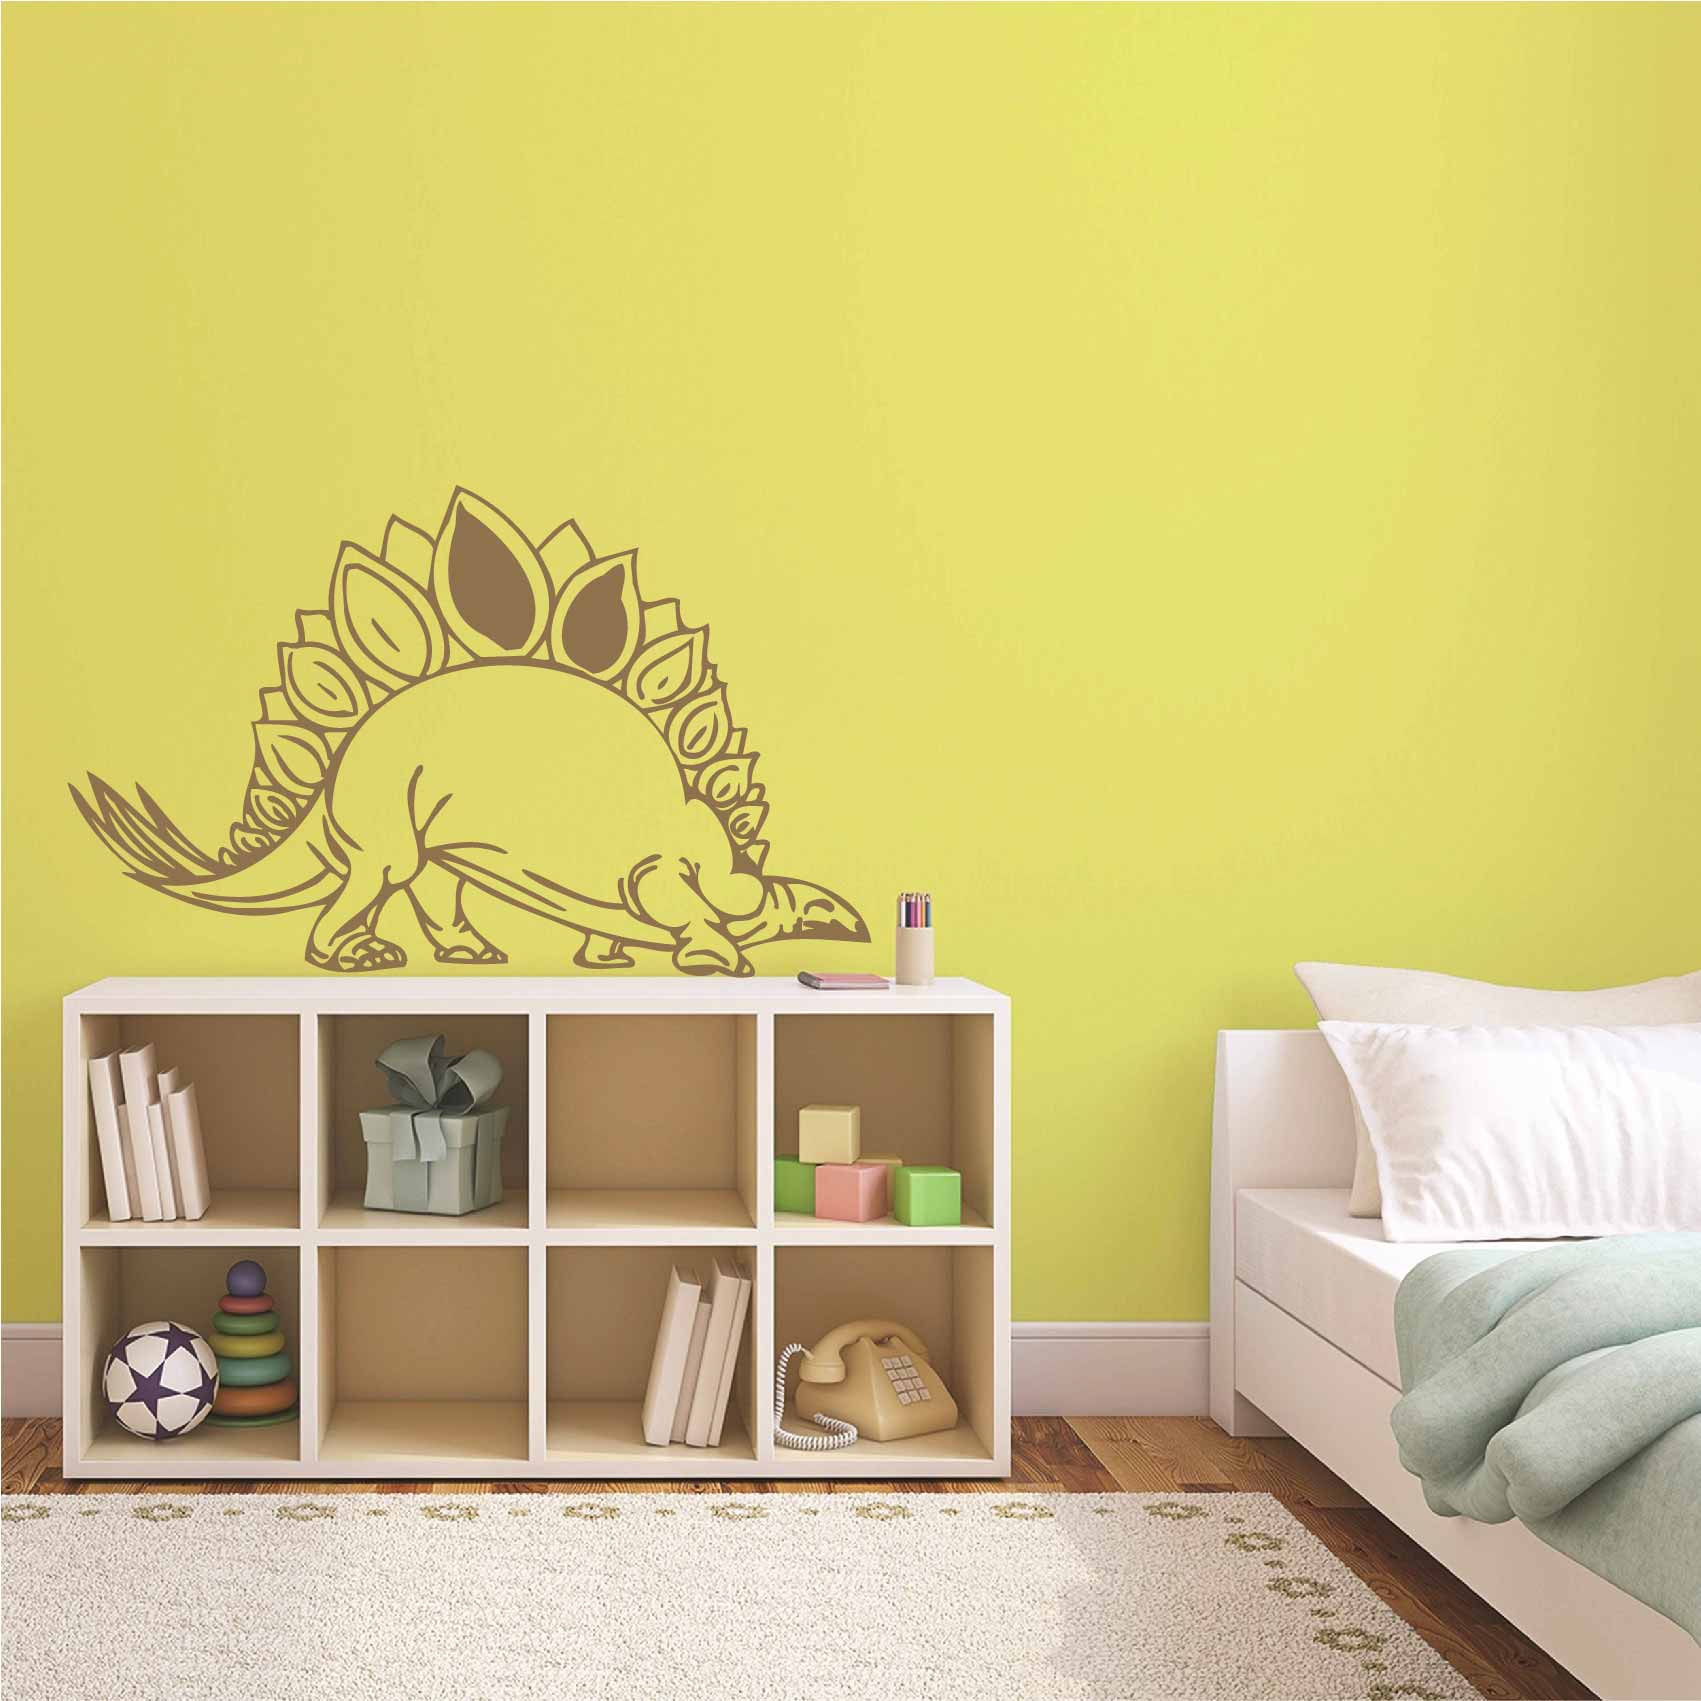 stickers-stegosaure-dinosaure-ref20dinosaure-stickers-muraux-dinosaure-autocollant-chambre-deco-sticker-mural-dinosaures-garçon-enfant